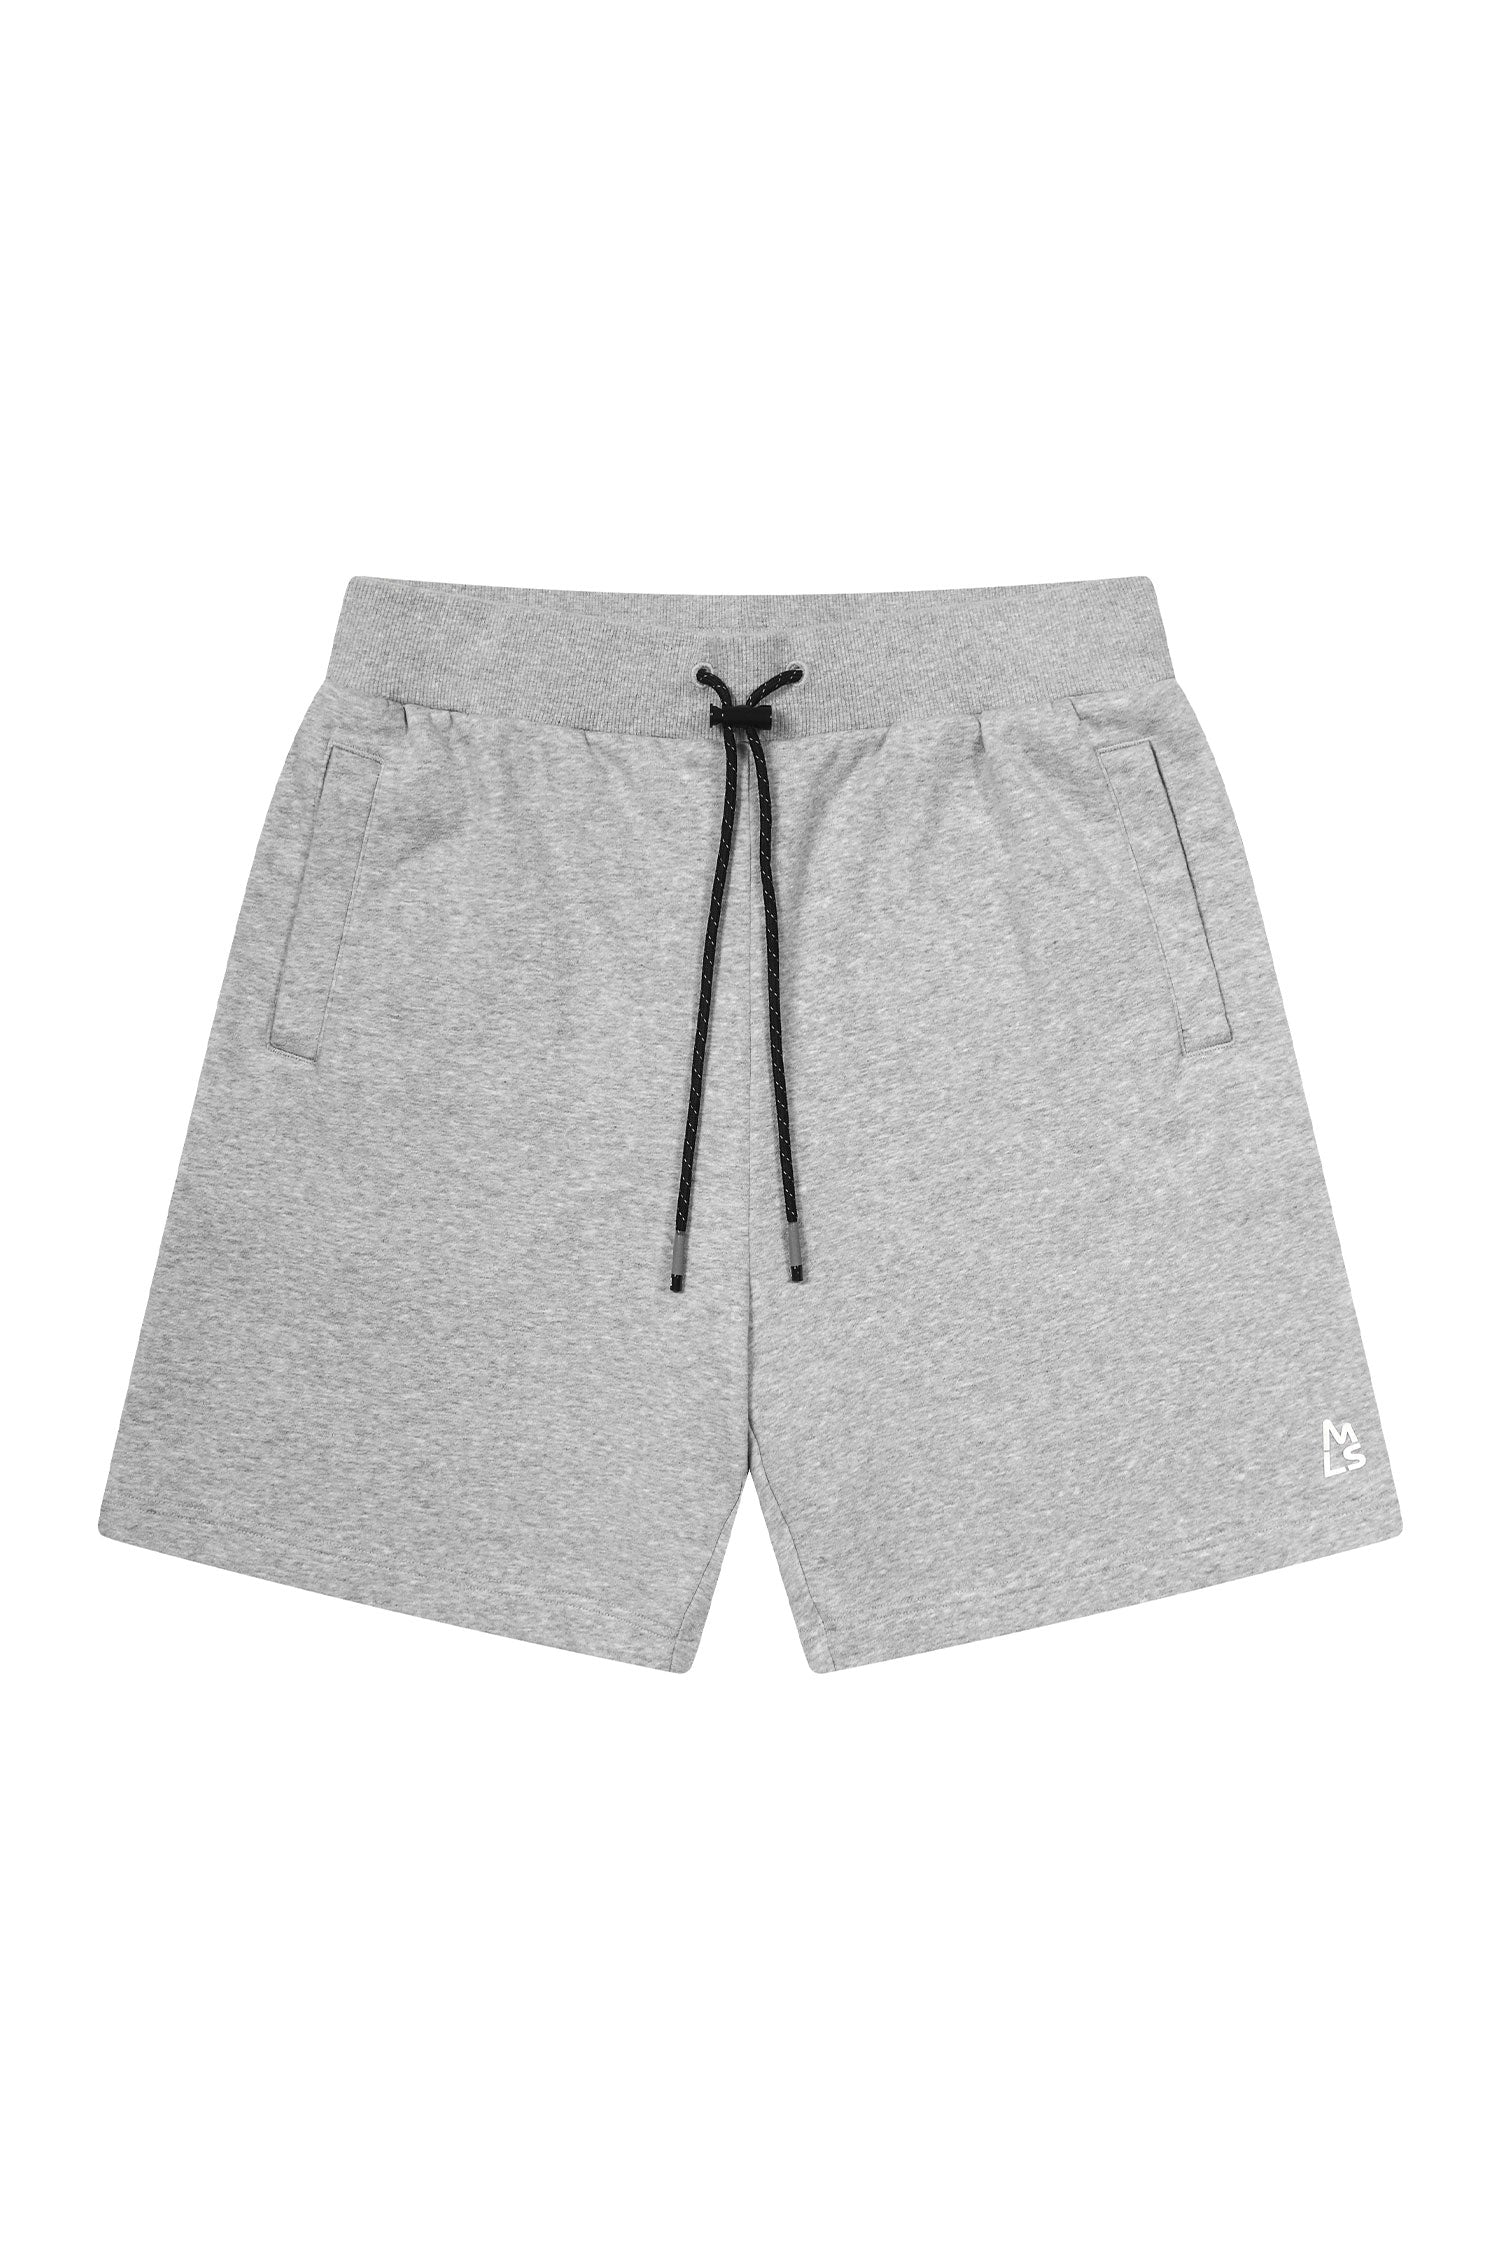 Essential 8" Sweat Shorts